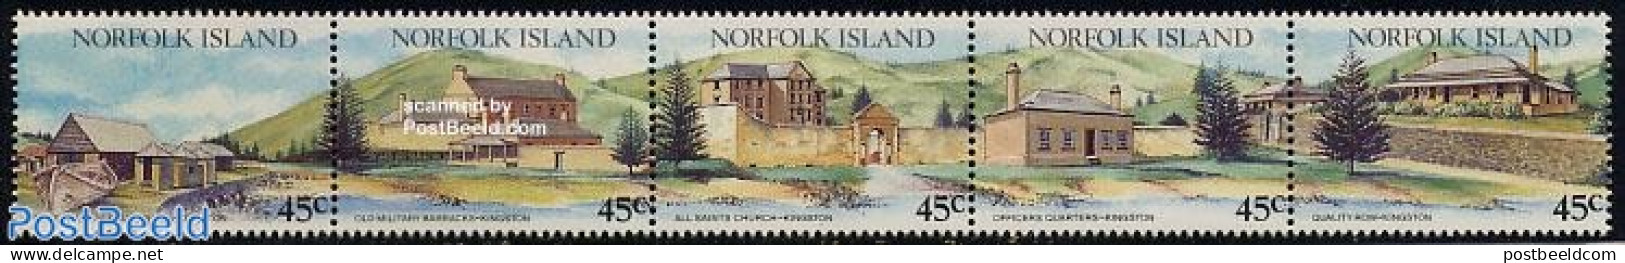 Norfolk Island 1993 Tourism 5v [::::], Mint NH, Transport - Various - Ships And Boats - Tourism - Art - Architecture - Bateaux